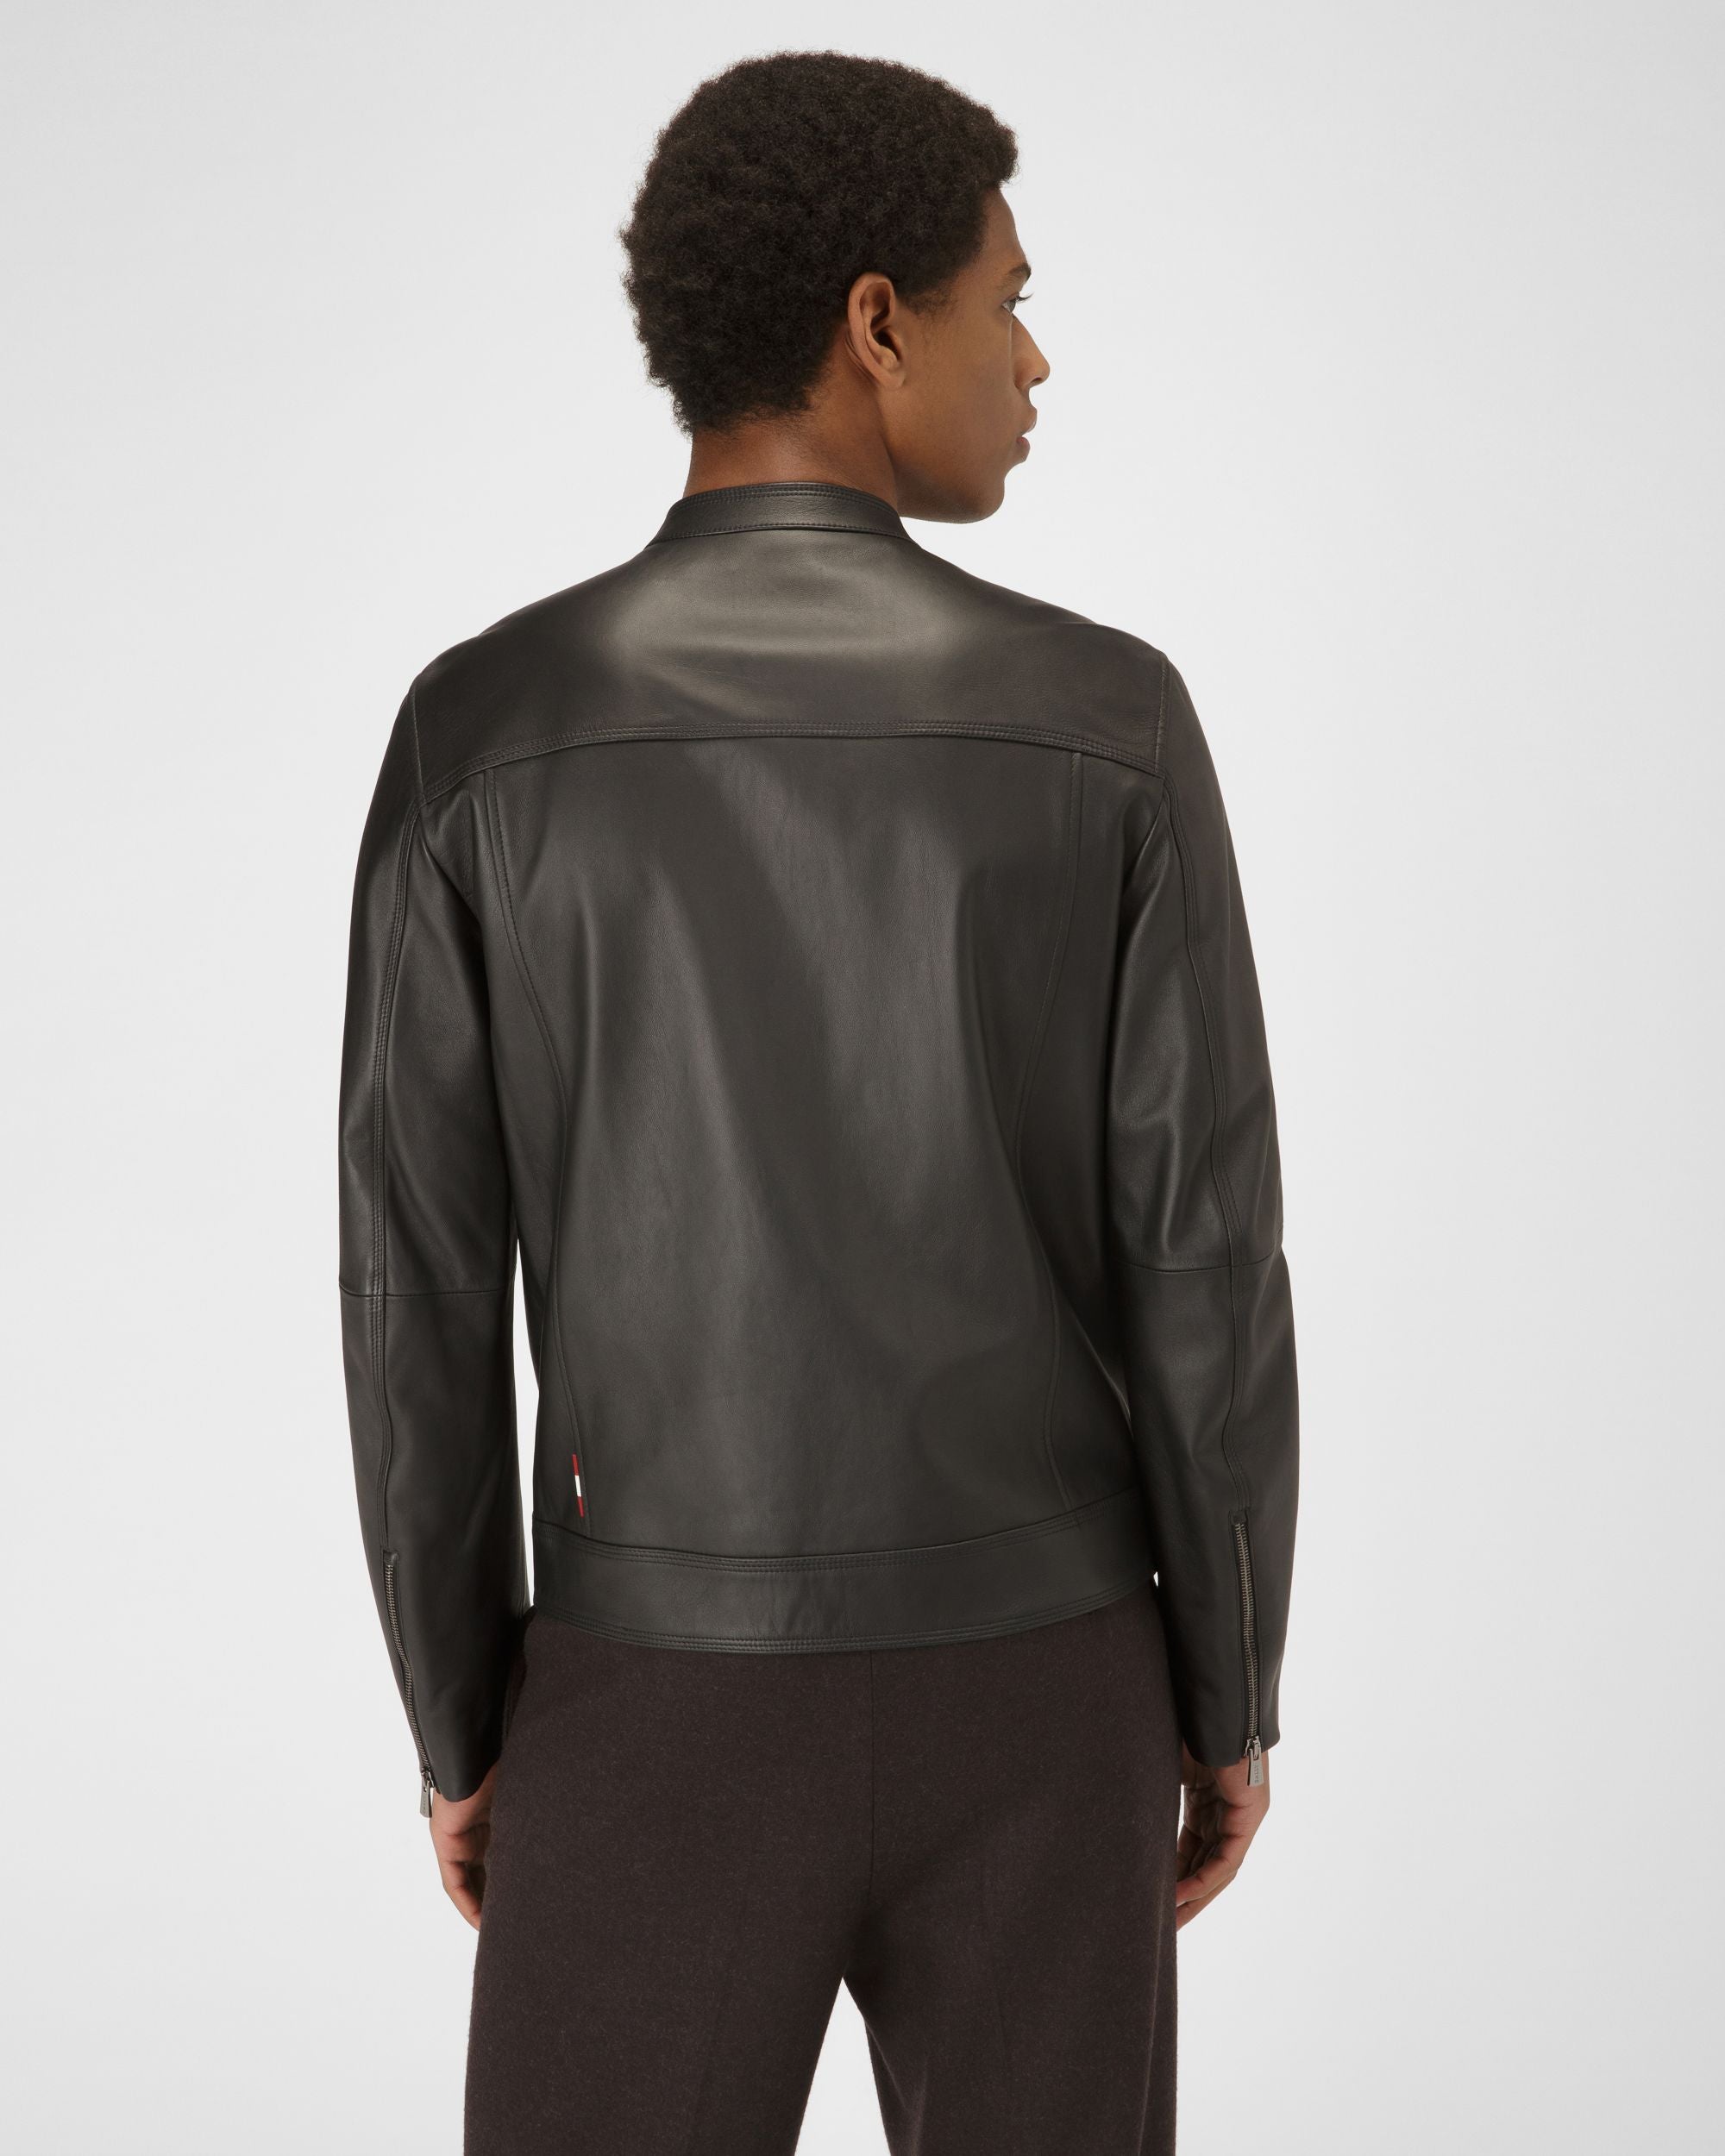 High Neck Blouson | Men\'s Outerwear | Black Leather | Bally